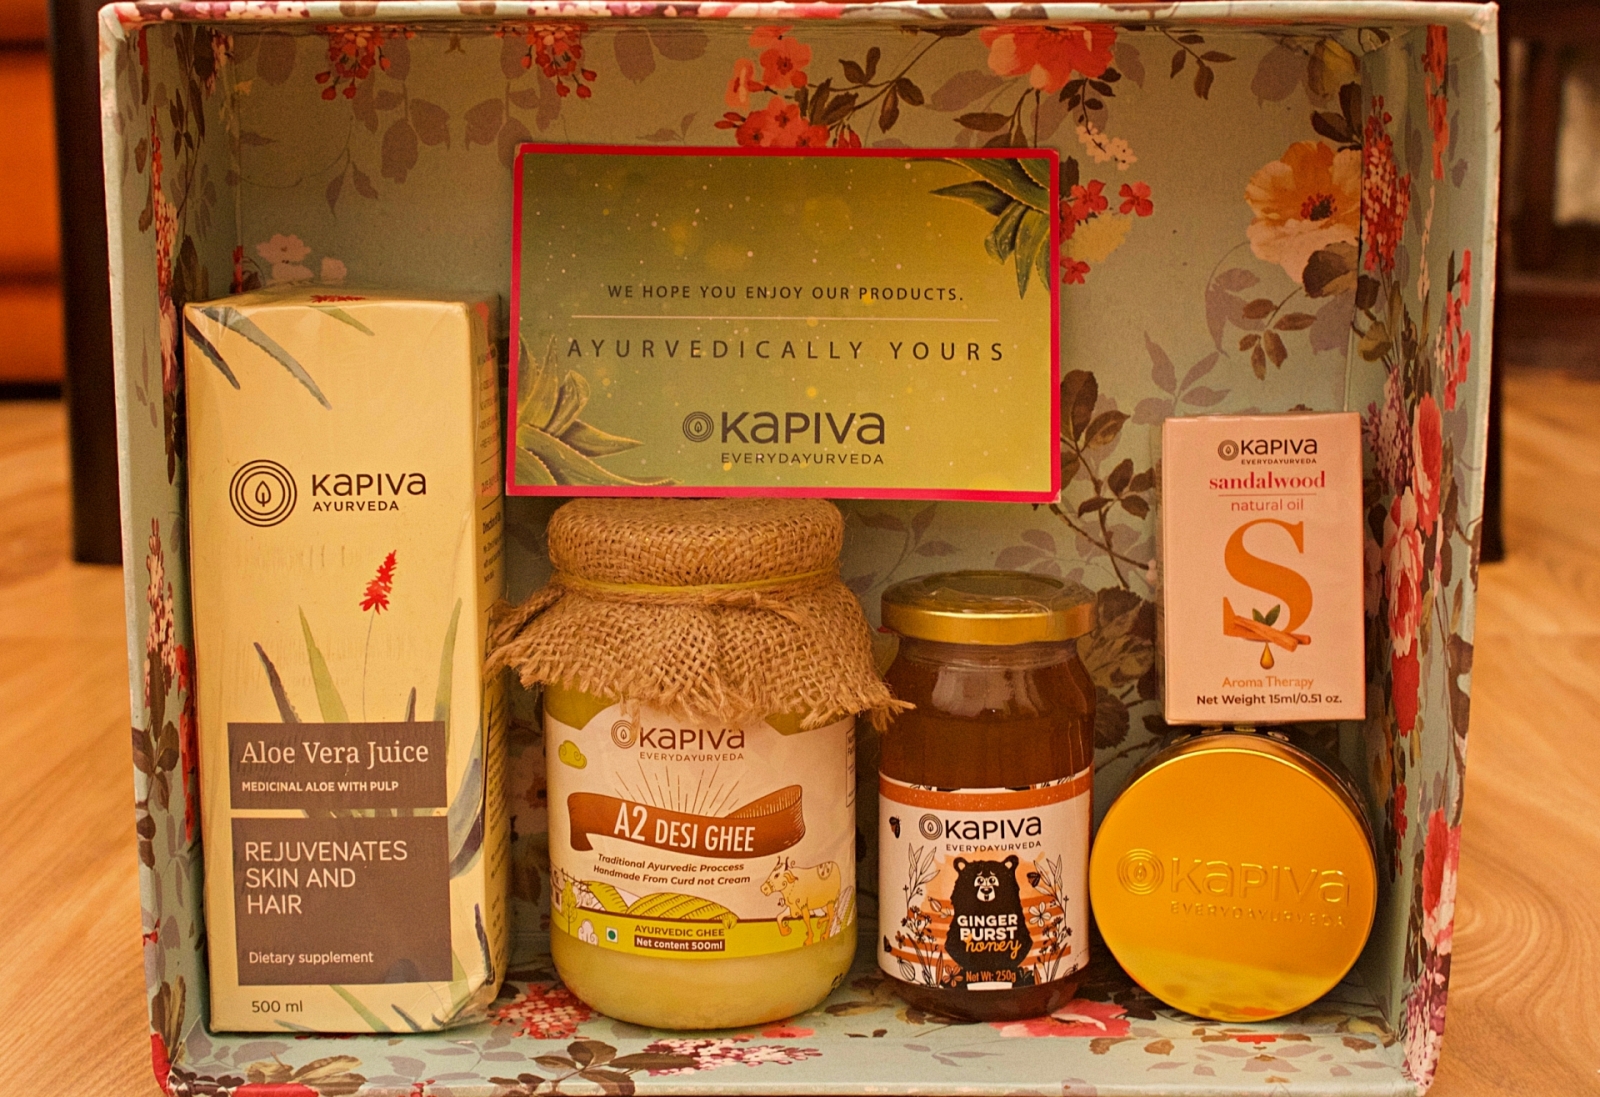 Kapiva: Authentic Ayurvedic Products